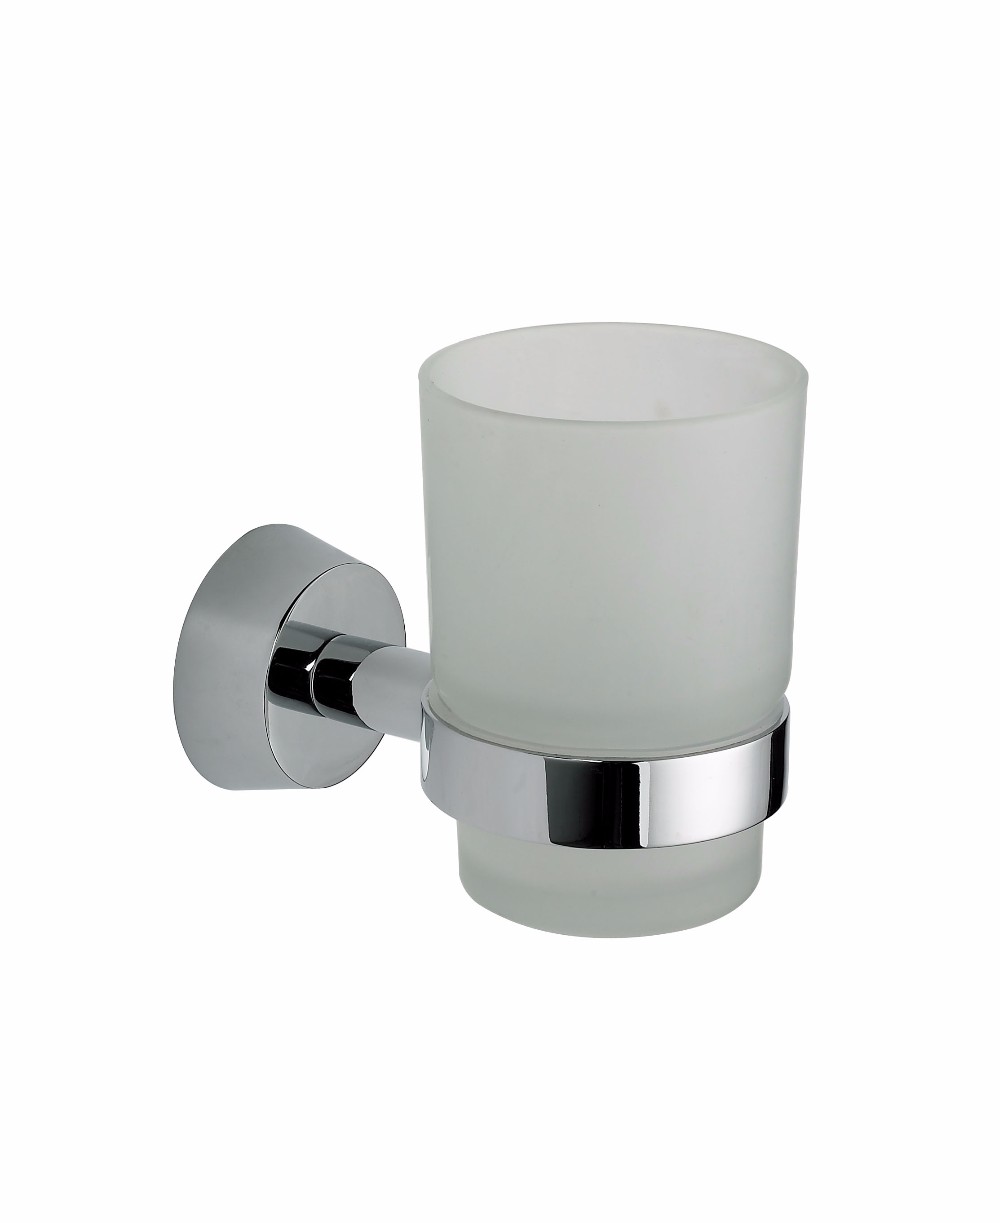 Zinc Alloy Single Plating Wall Mounted Tumbler Holder For Bathroom1601